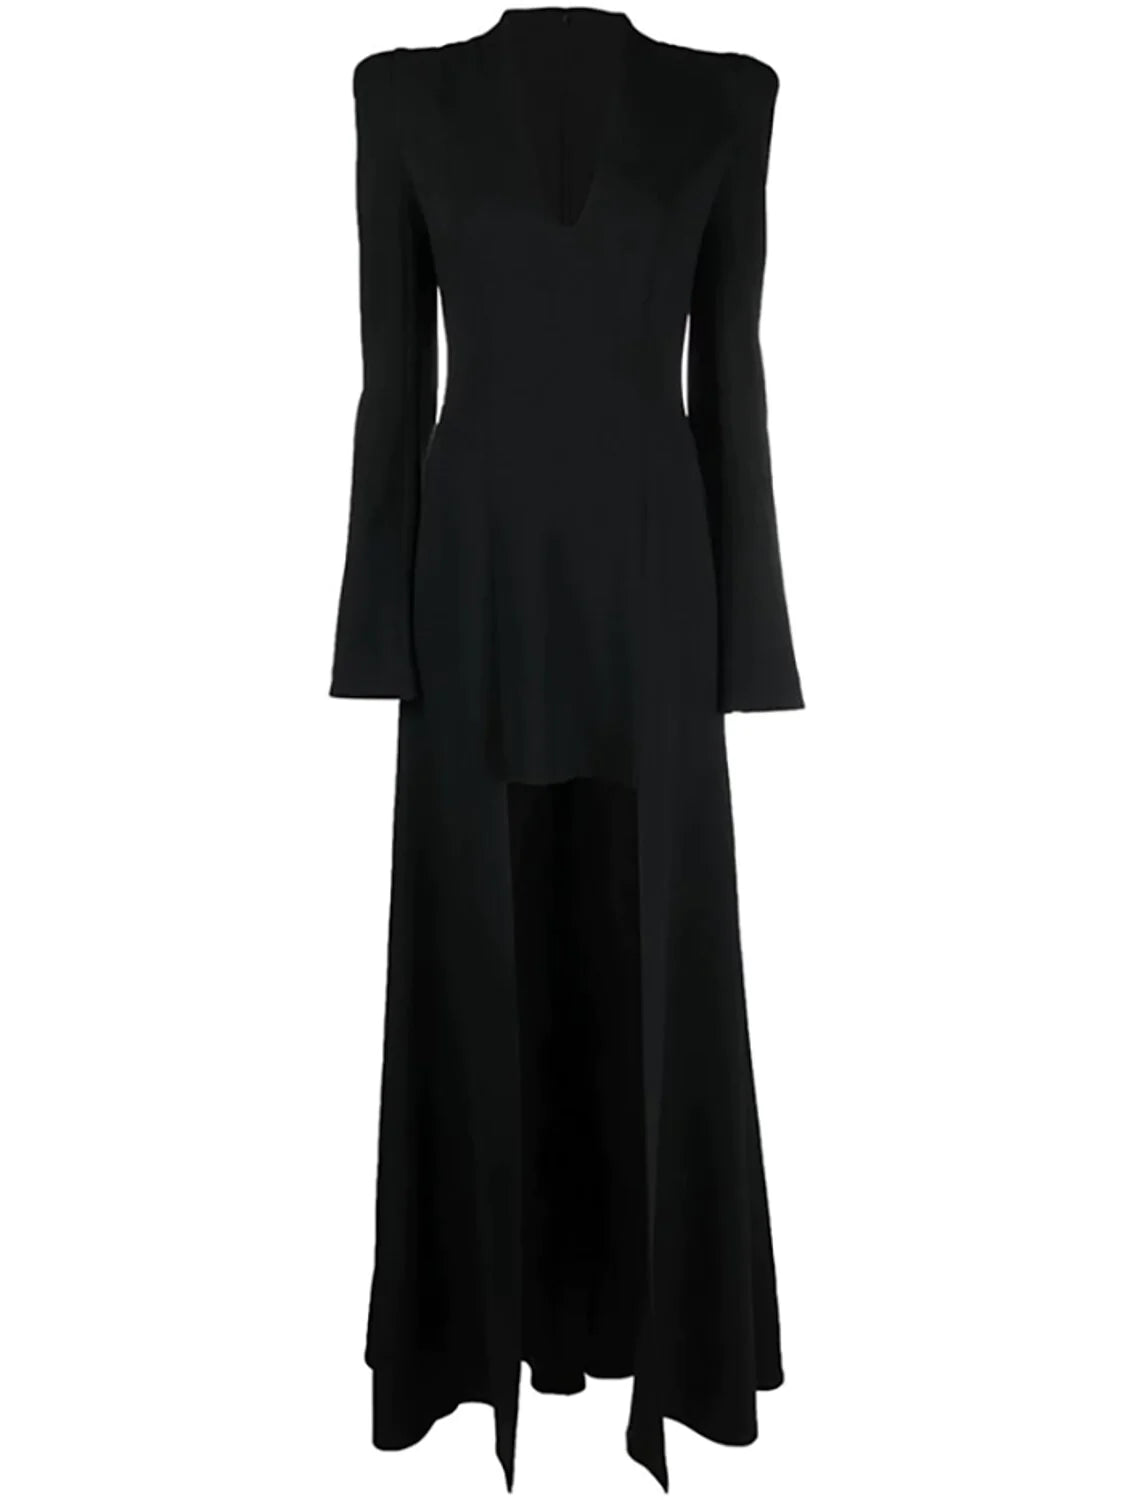 A-Line Evening Gown Elegant Dress Formal Asymmetrical Black Dress Long Sleeve V Neck Stretch Fabric with Pleats